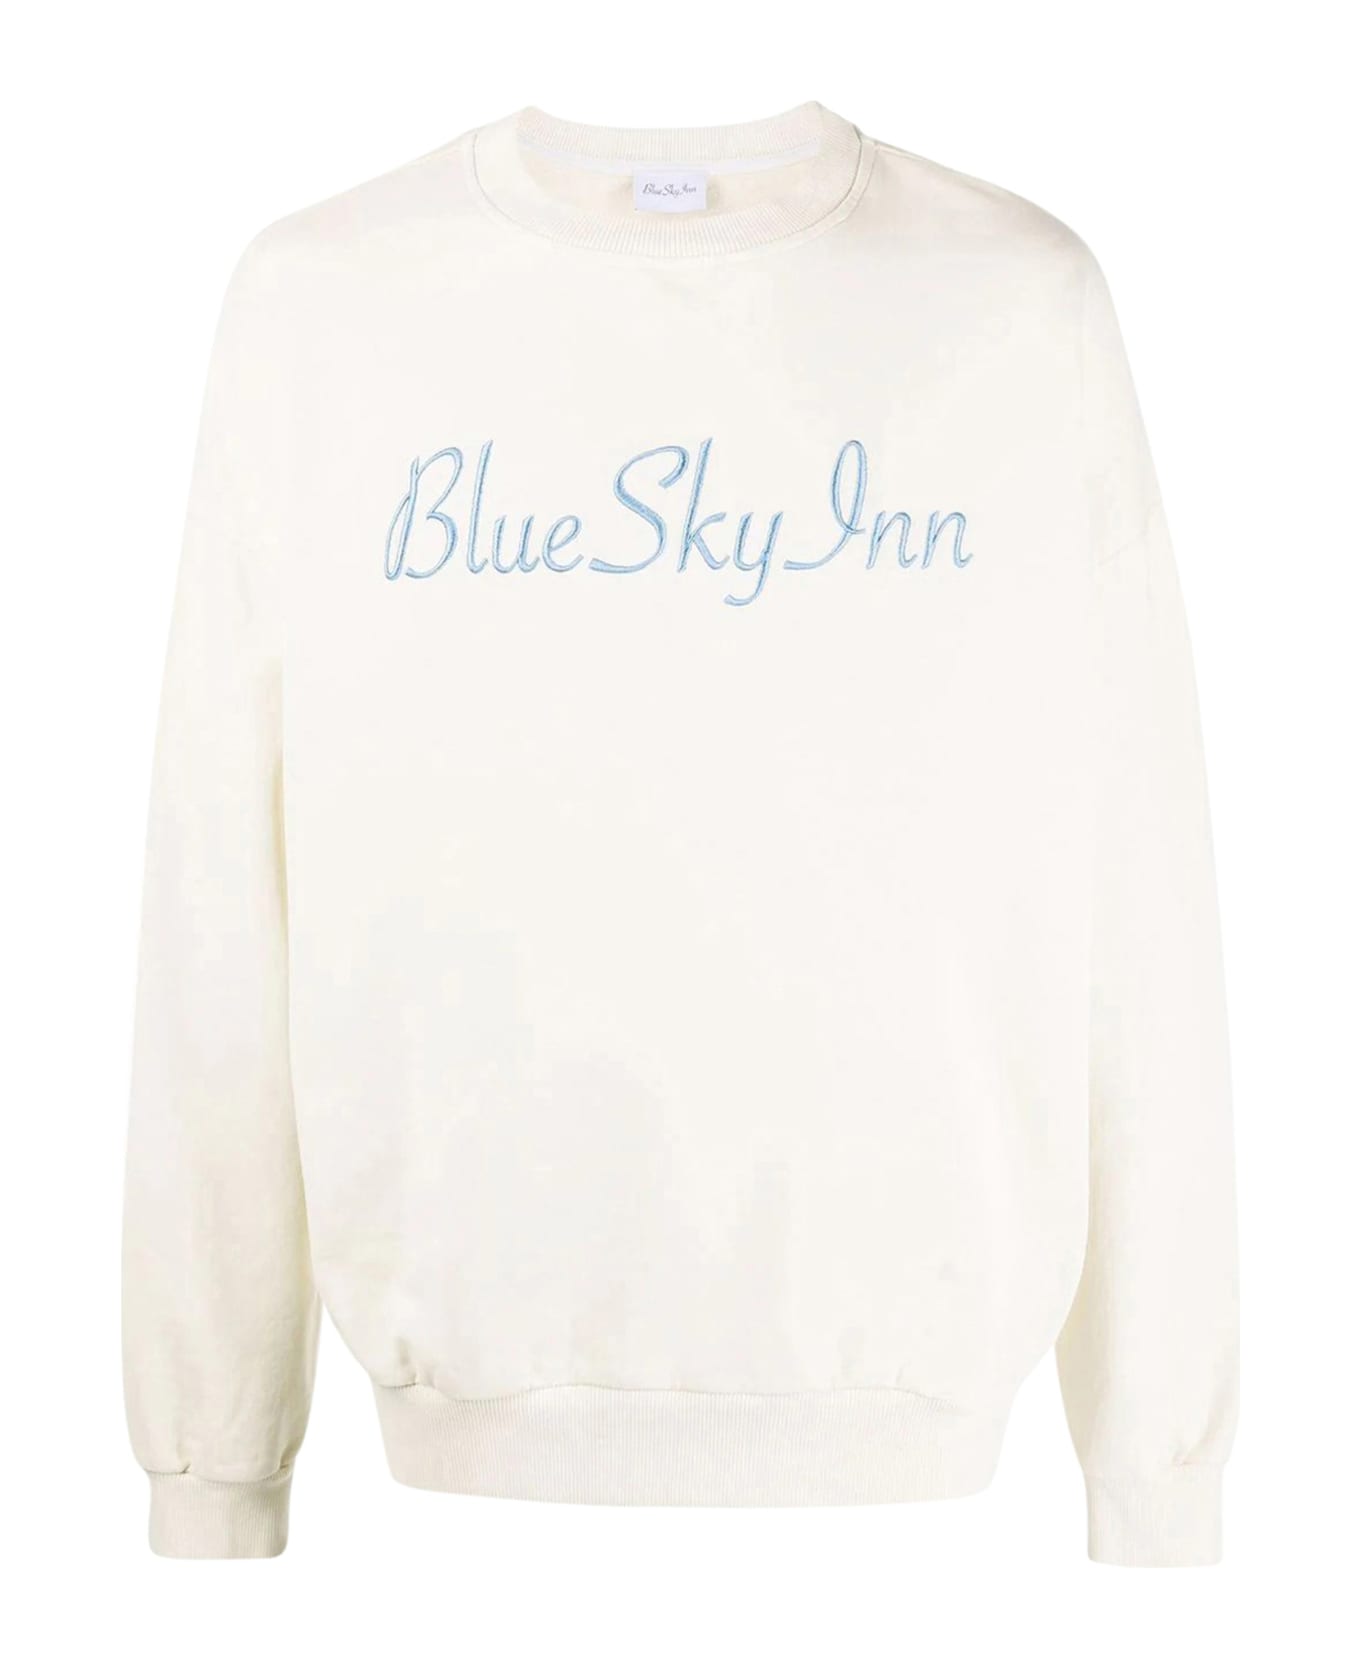 Blue Sky Inn Logo Crewneck Sweatshirt - Crm Cream